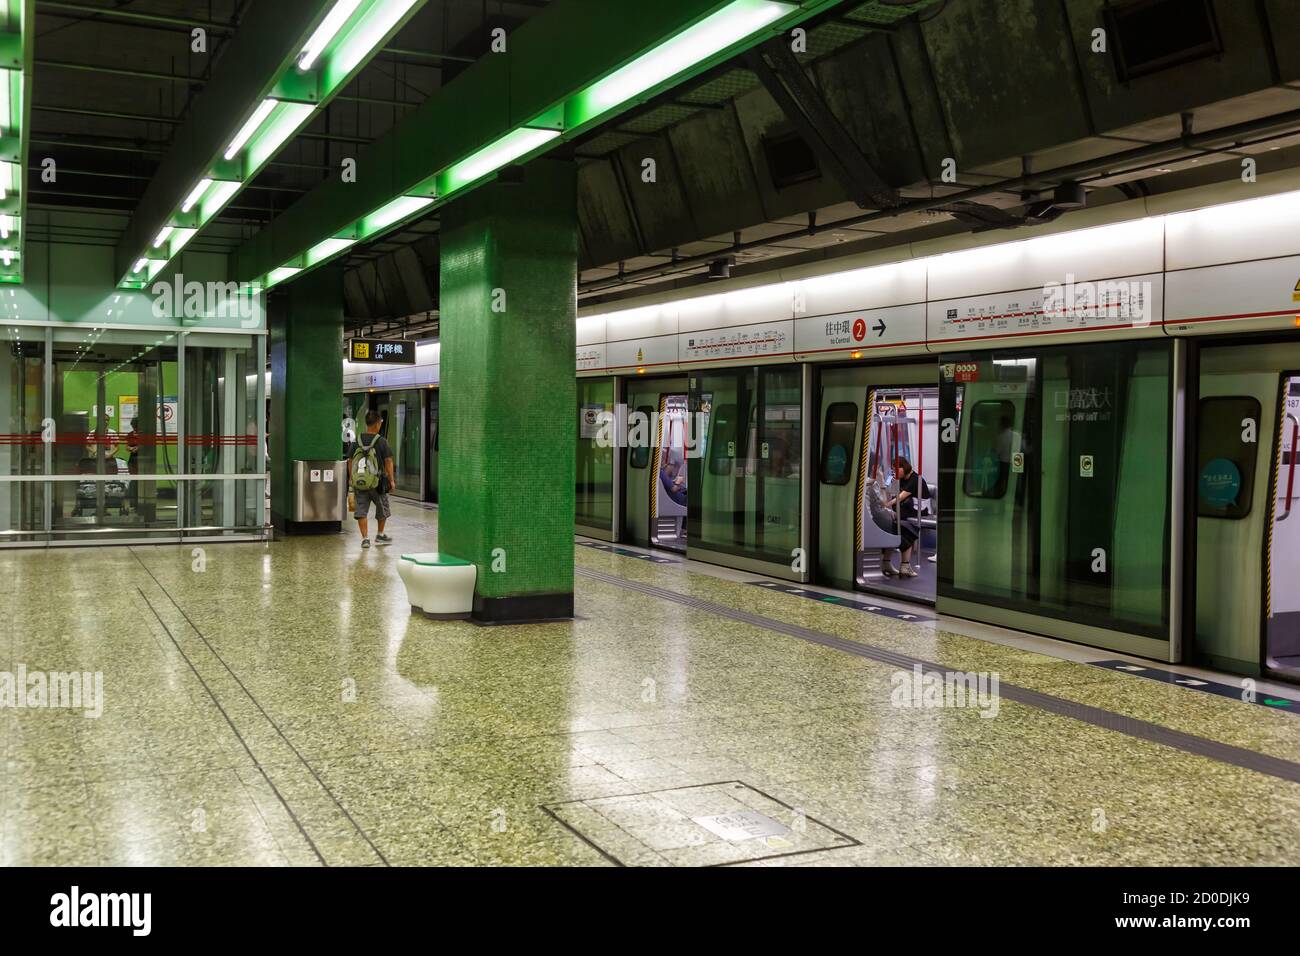 Hong Kong, Chine - 19 septembre 2019 : Metro Hongkong métro métro de Hong Kong Station Tai WO Hau en Chine. Banque D'Images